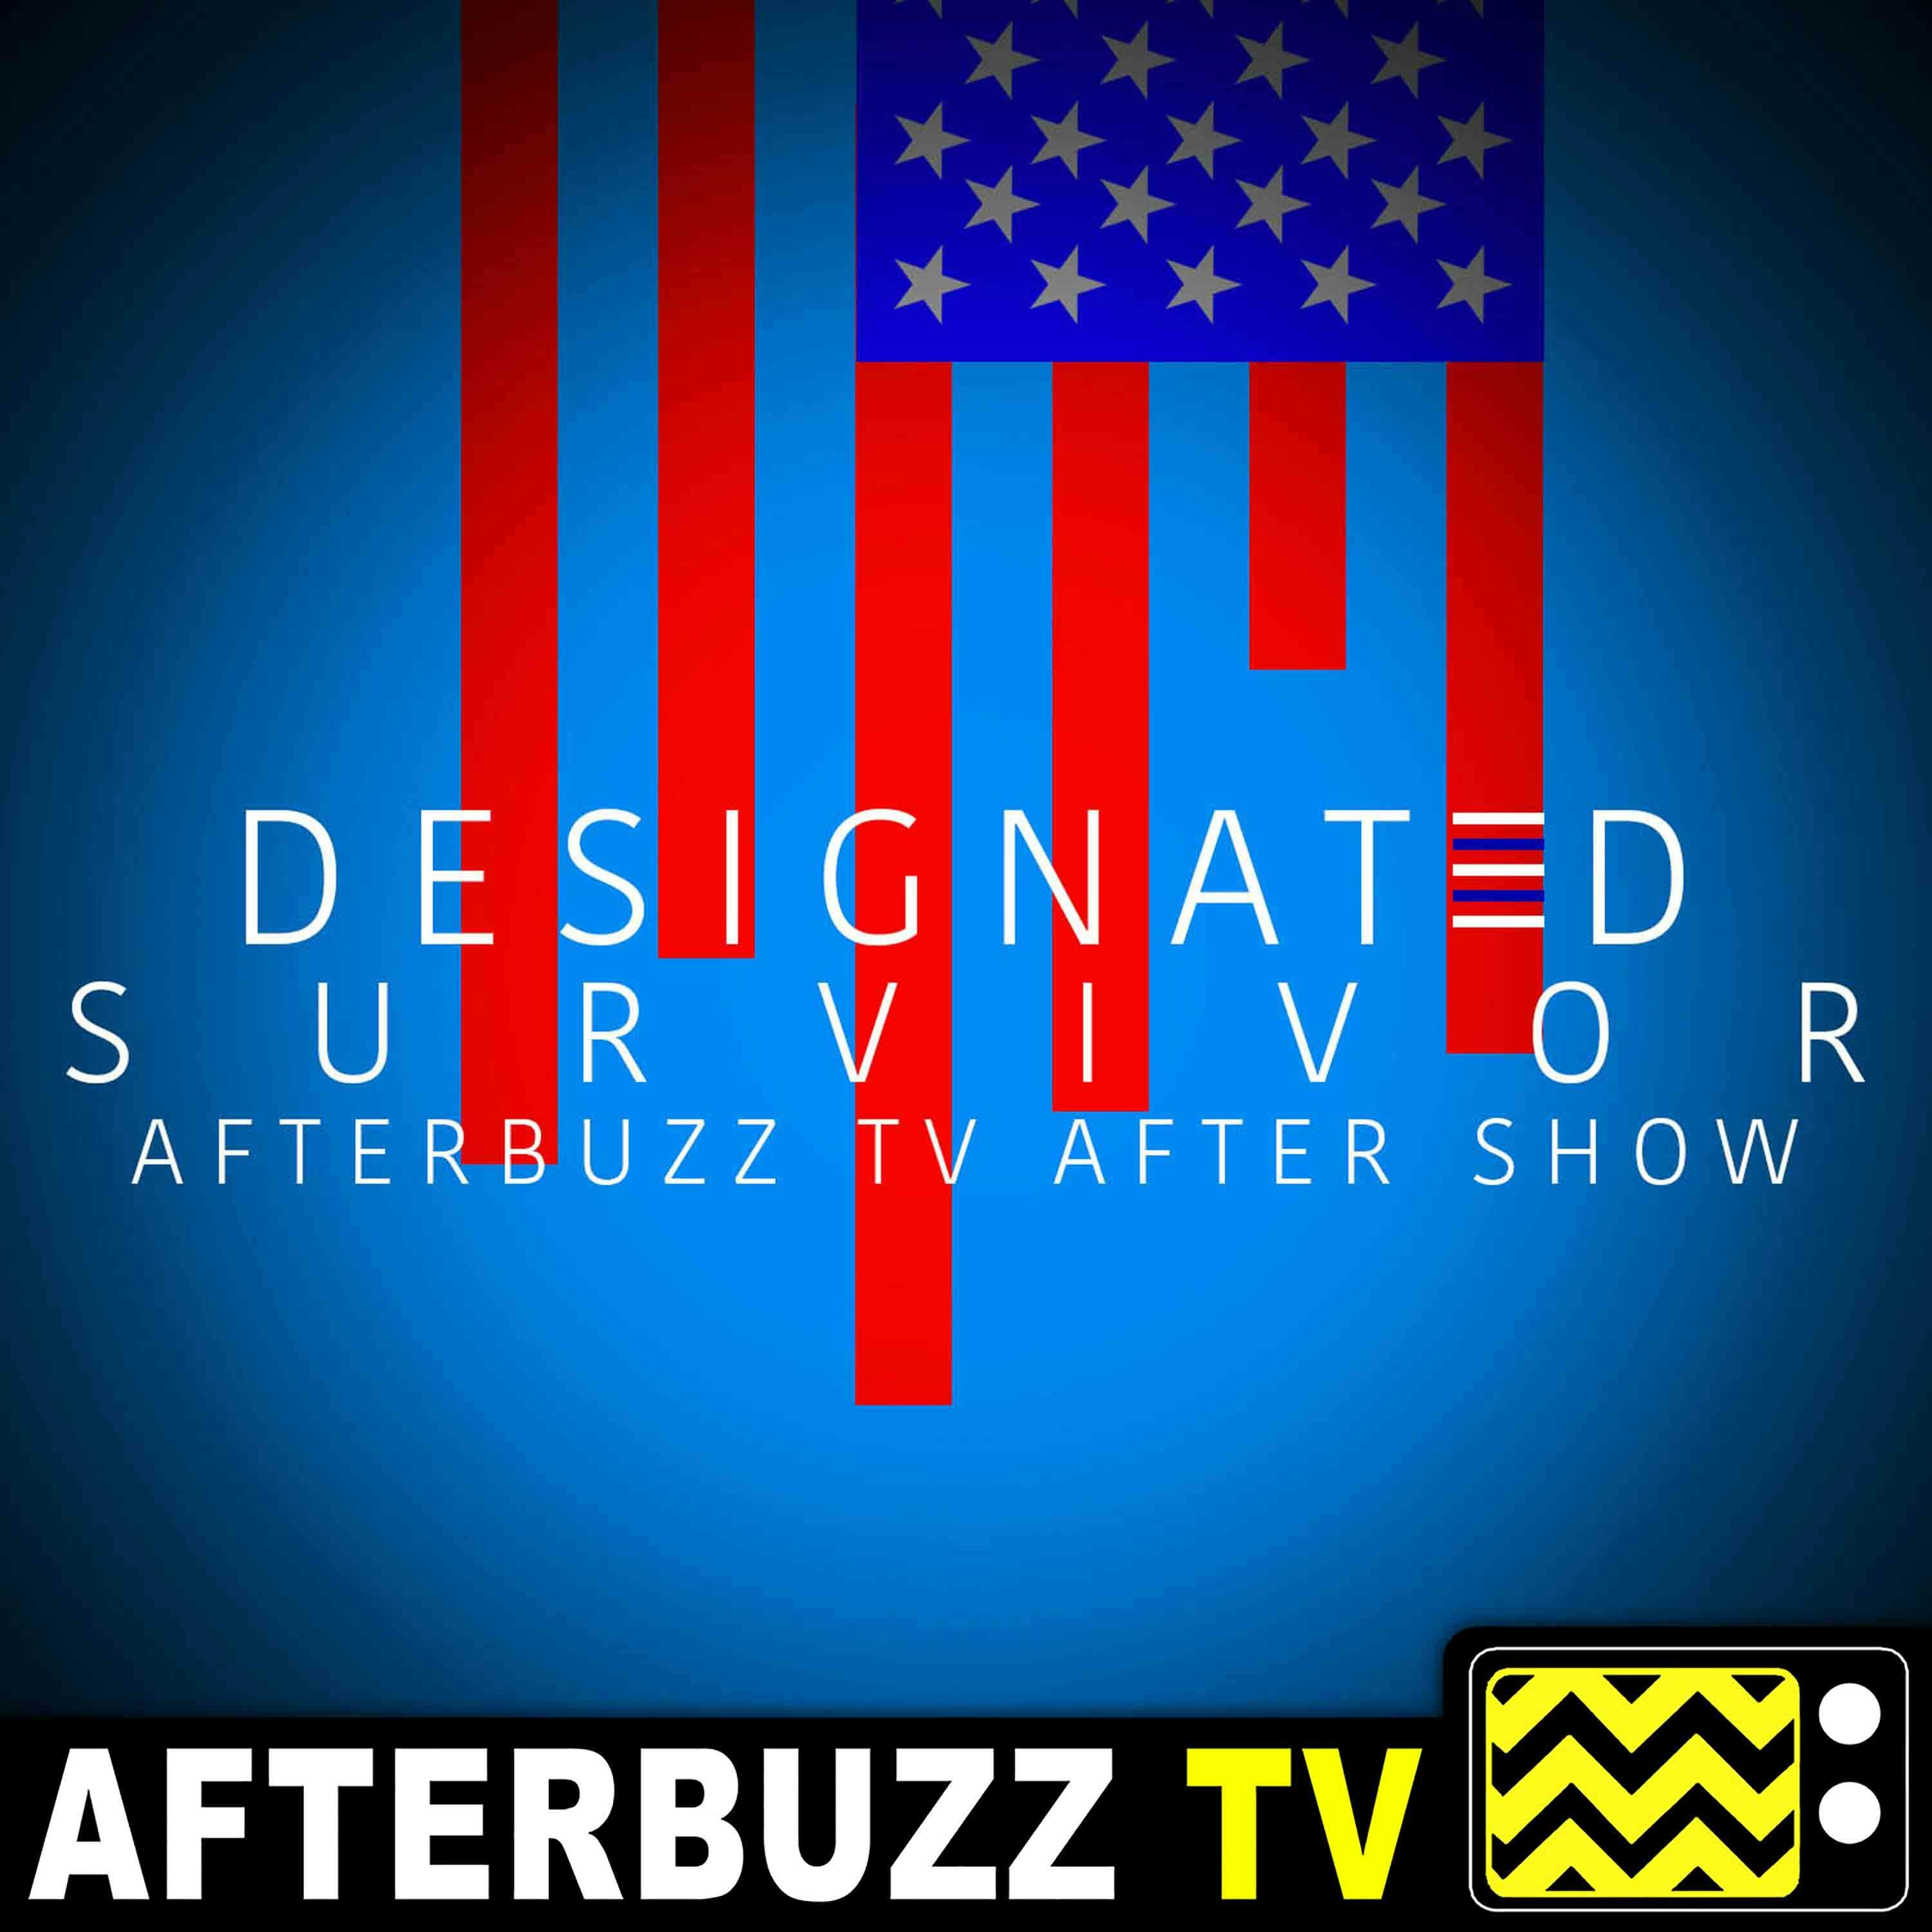 Designated Survivor S:1 | Lazarus E:18 | AfterBuzzTV AfterShow